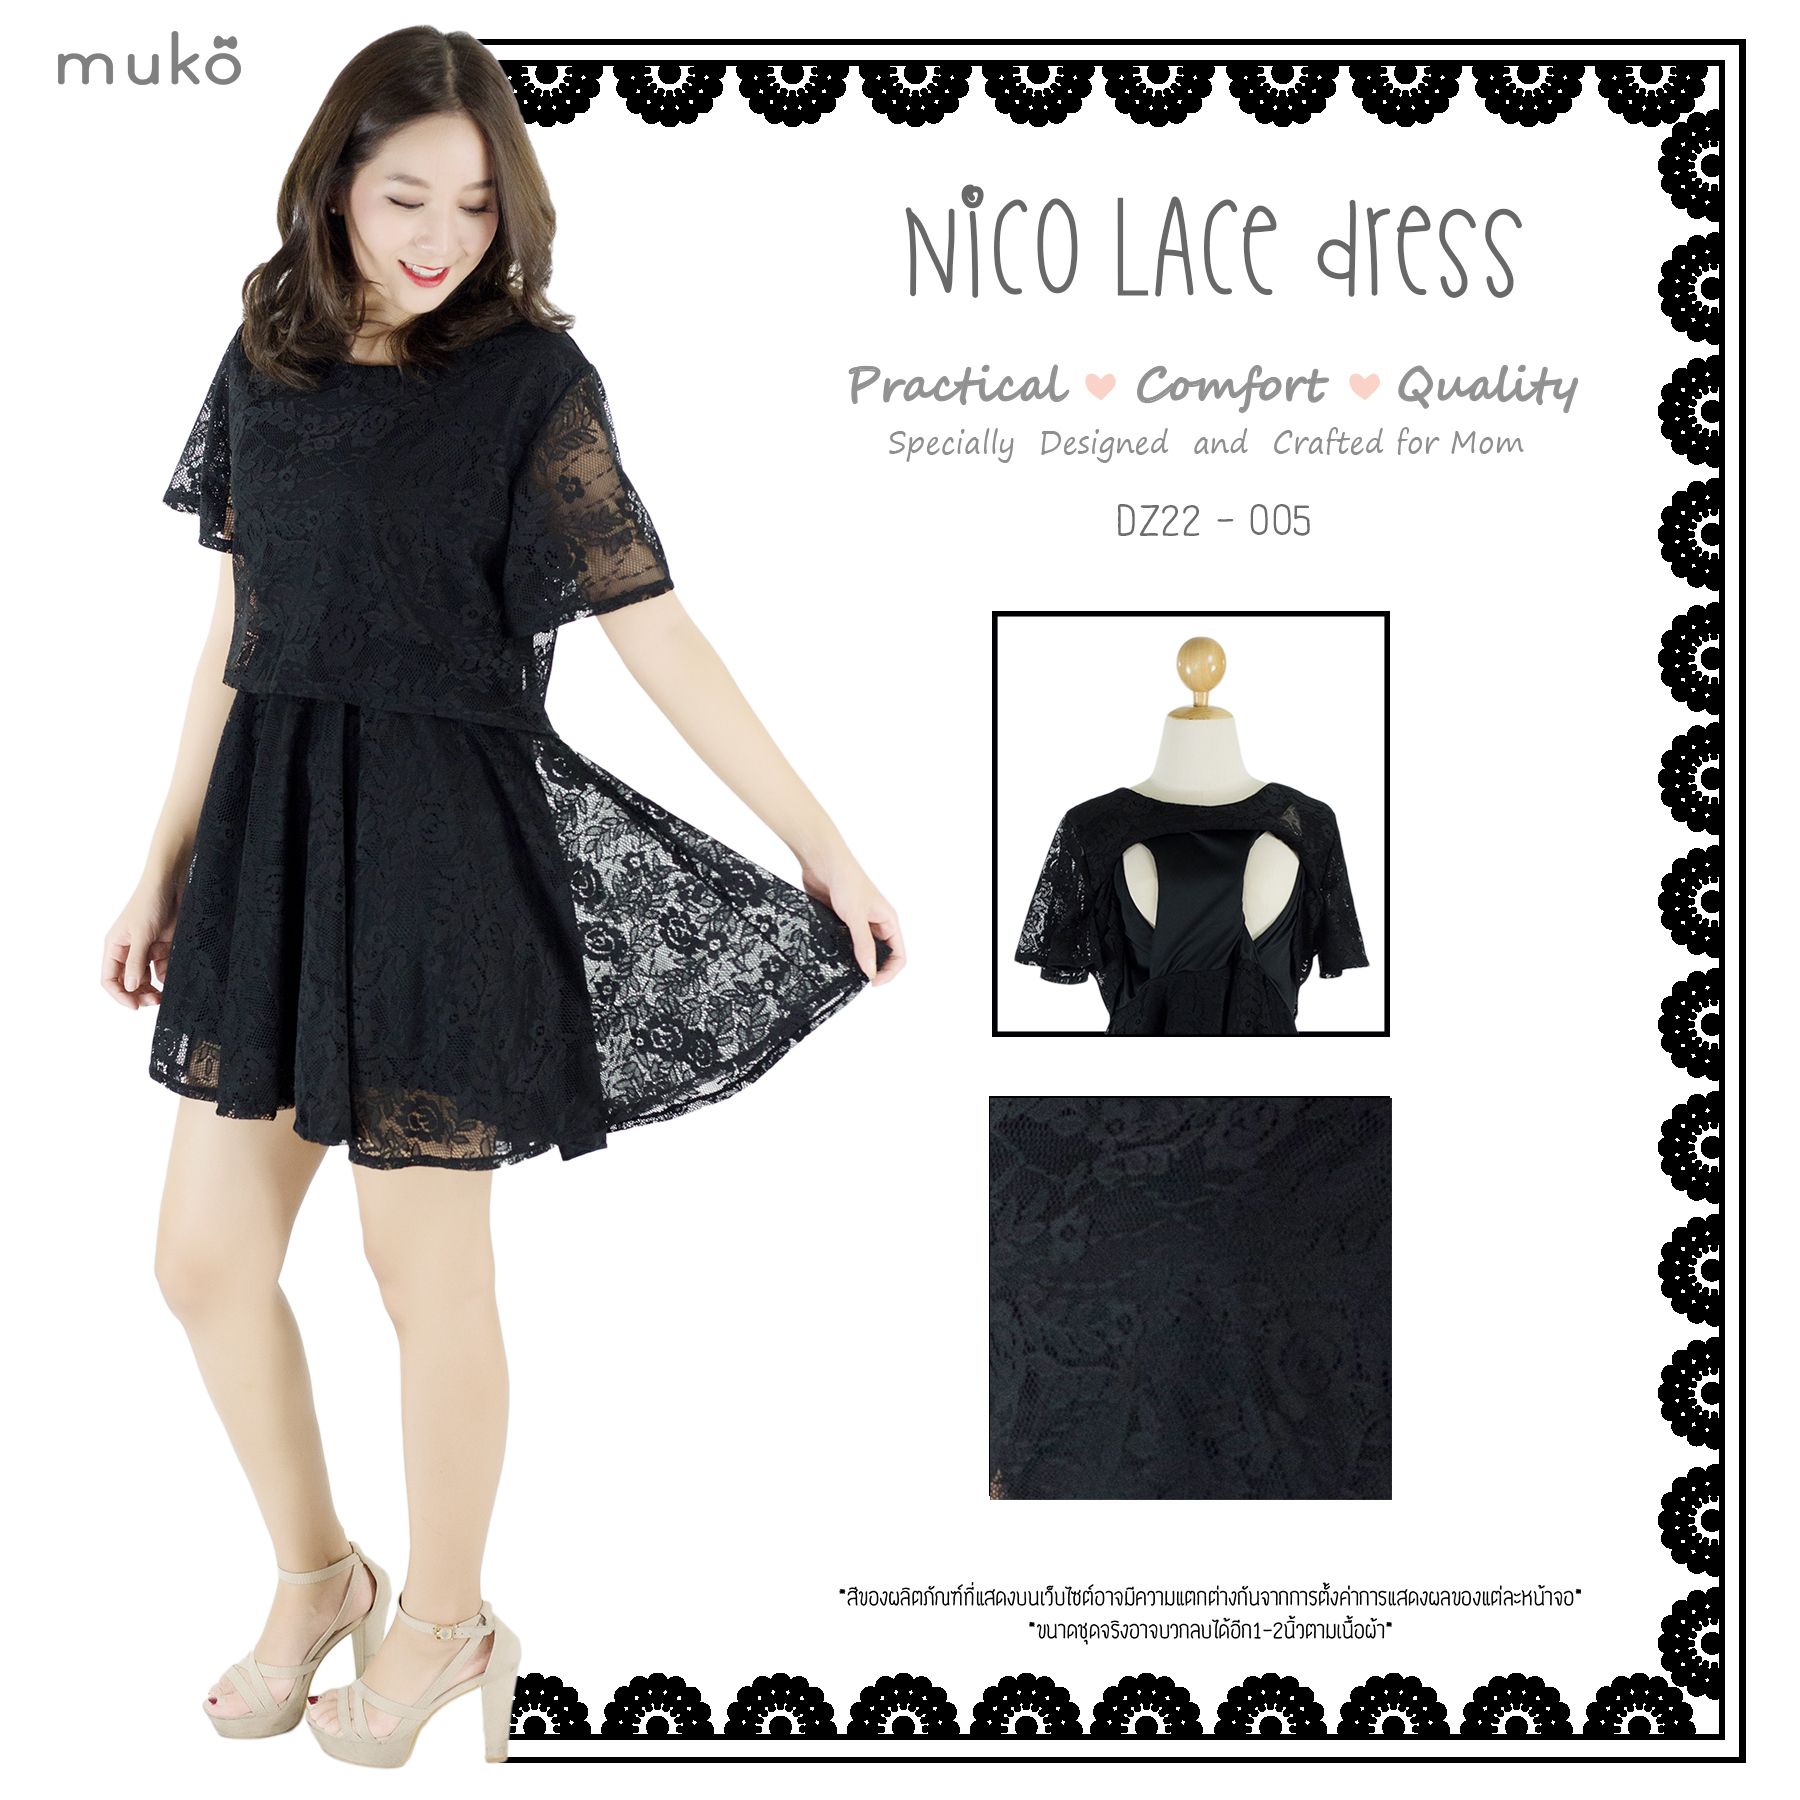 Muko Nico Lace Dress เดรสคลุมท้อง เปิดให้นม DZ22-005 ดำ